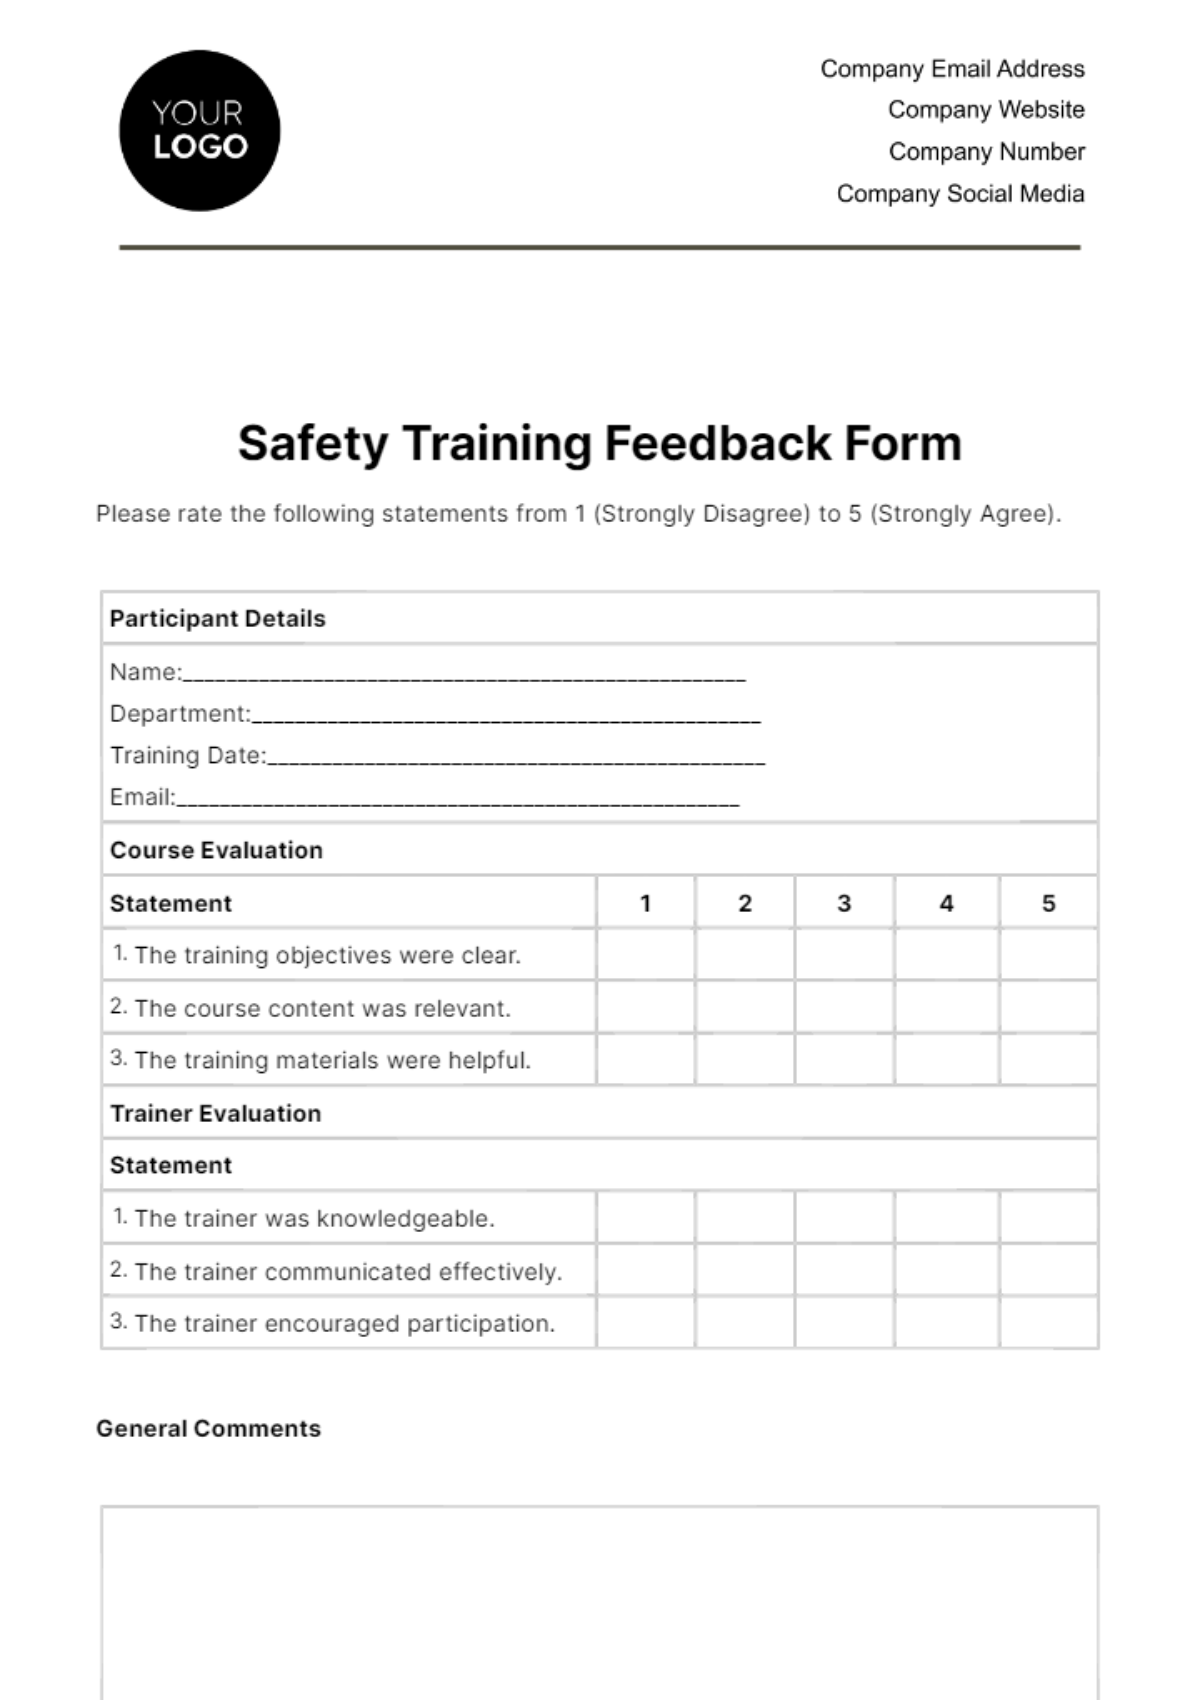 Safety Training Feedback Form HR Template